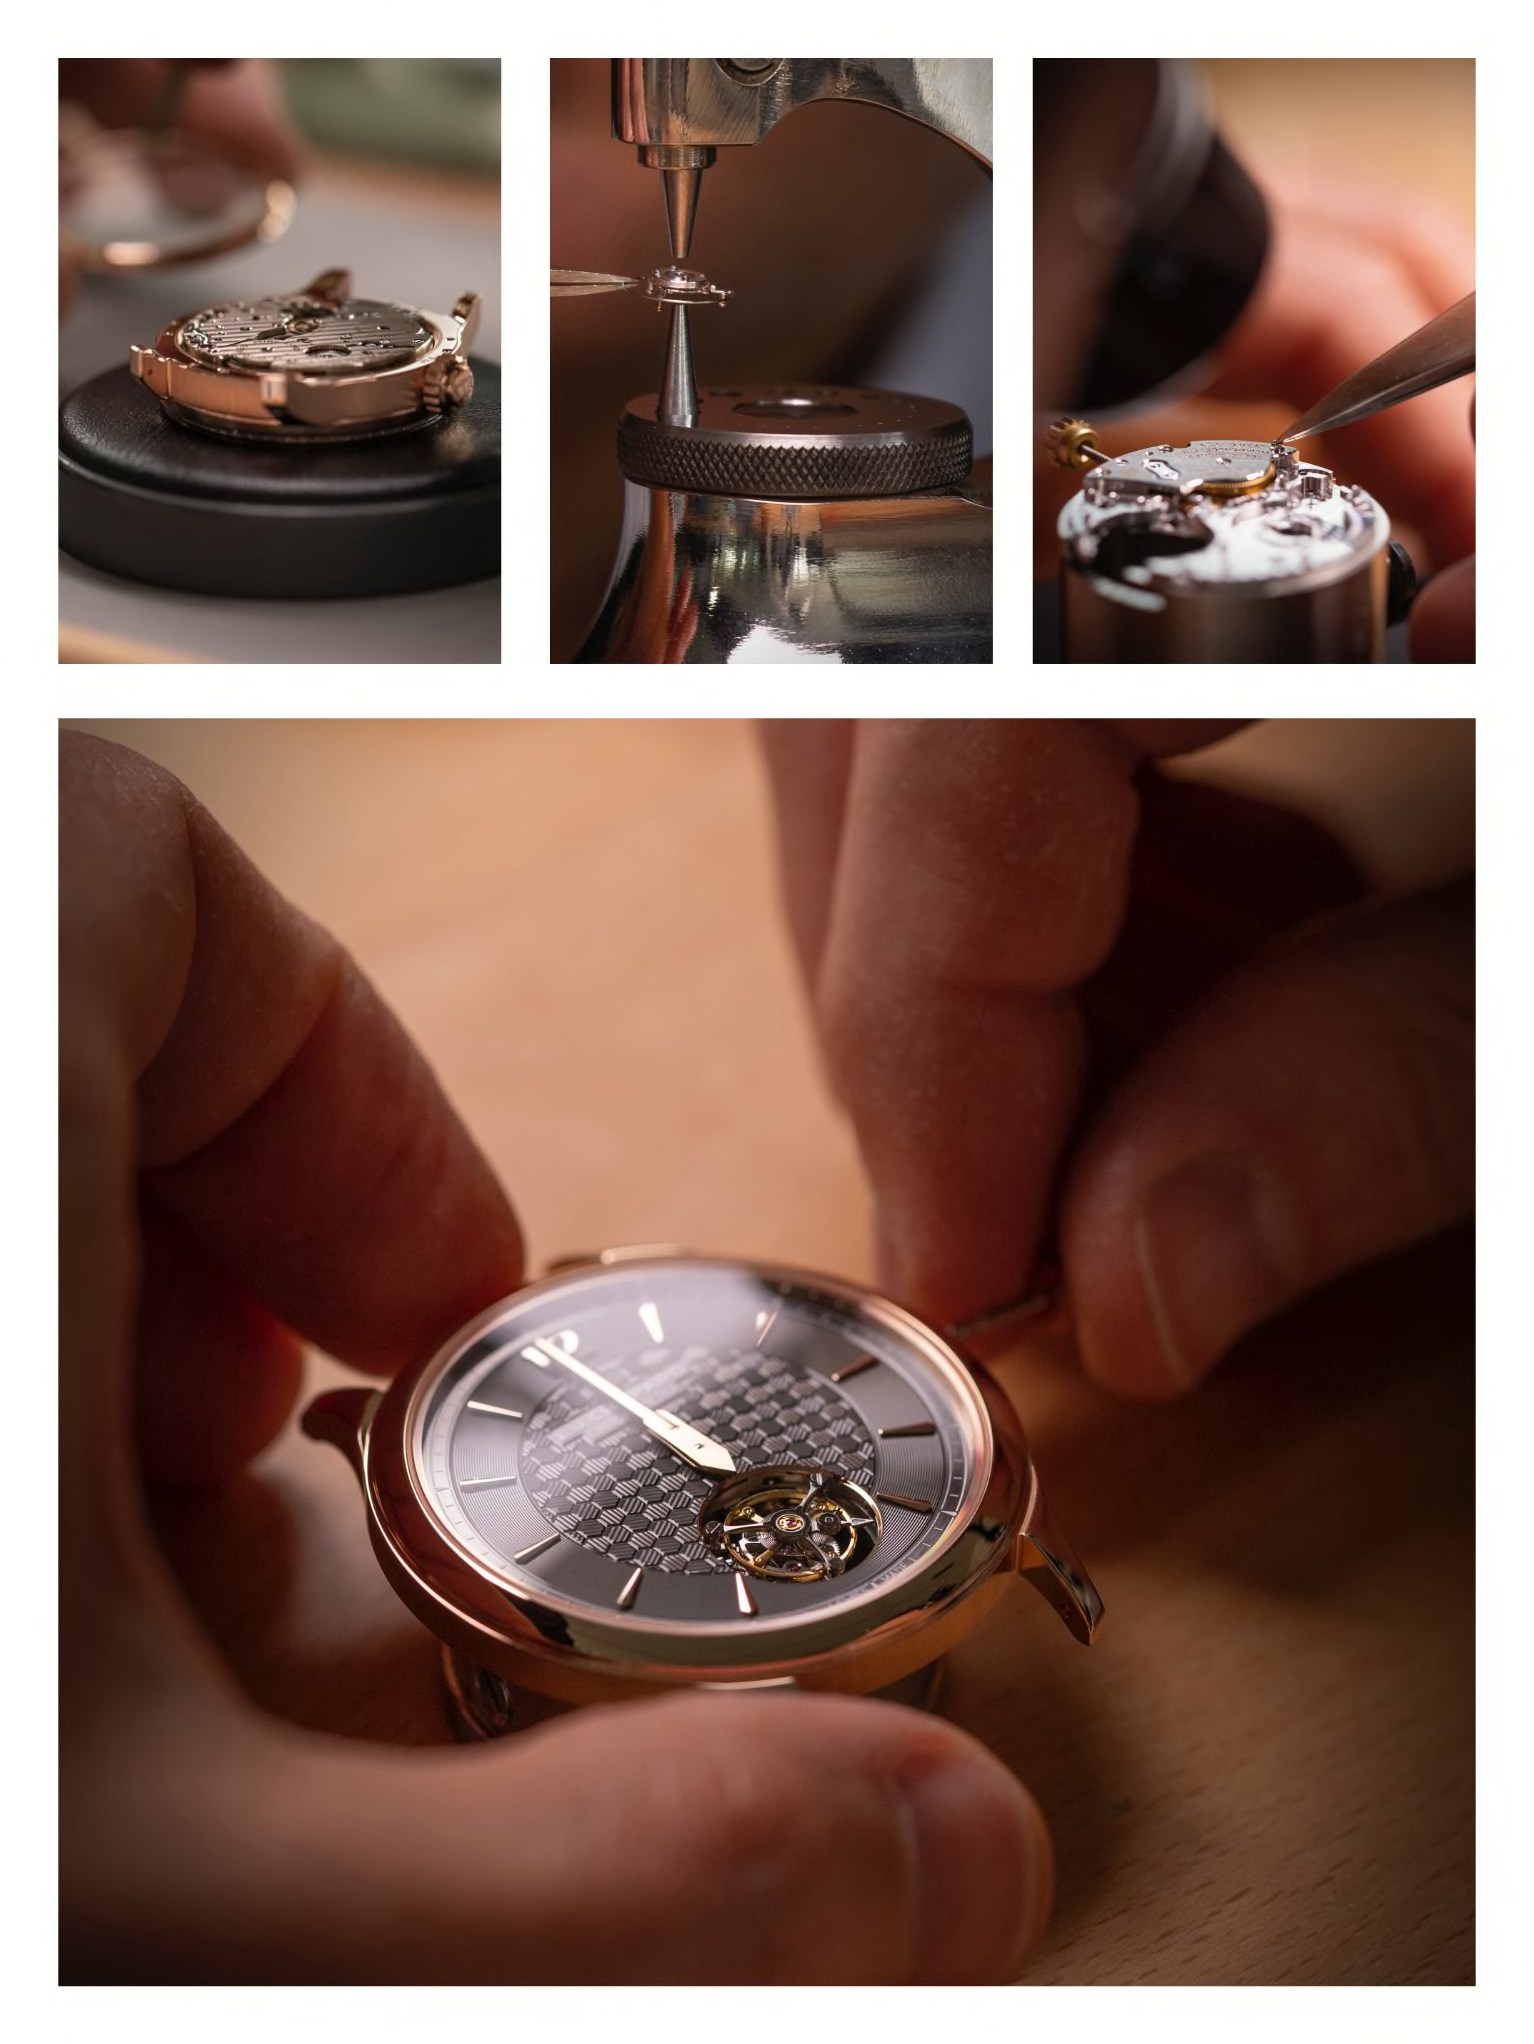 Assembly procedure of a Chopard watch